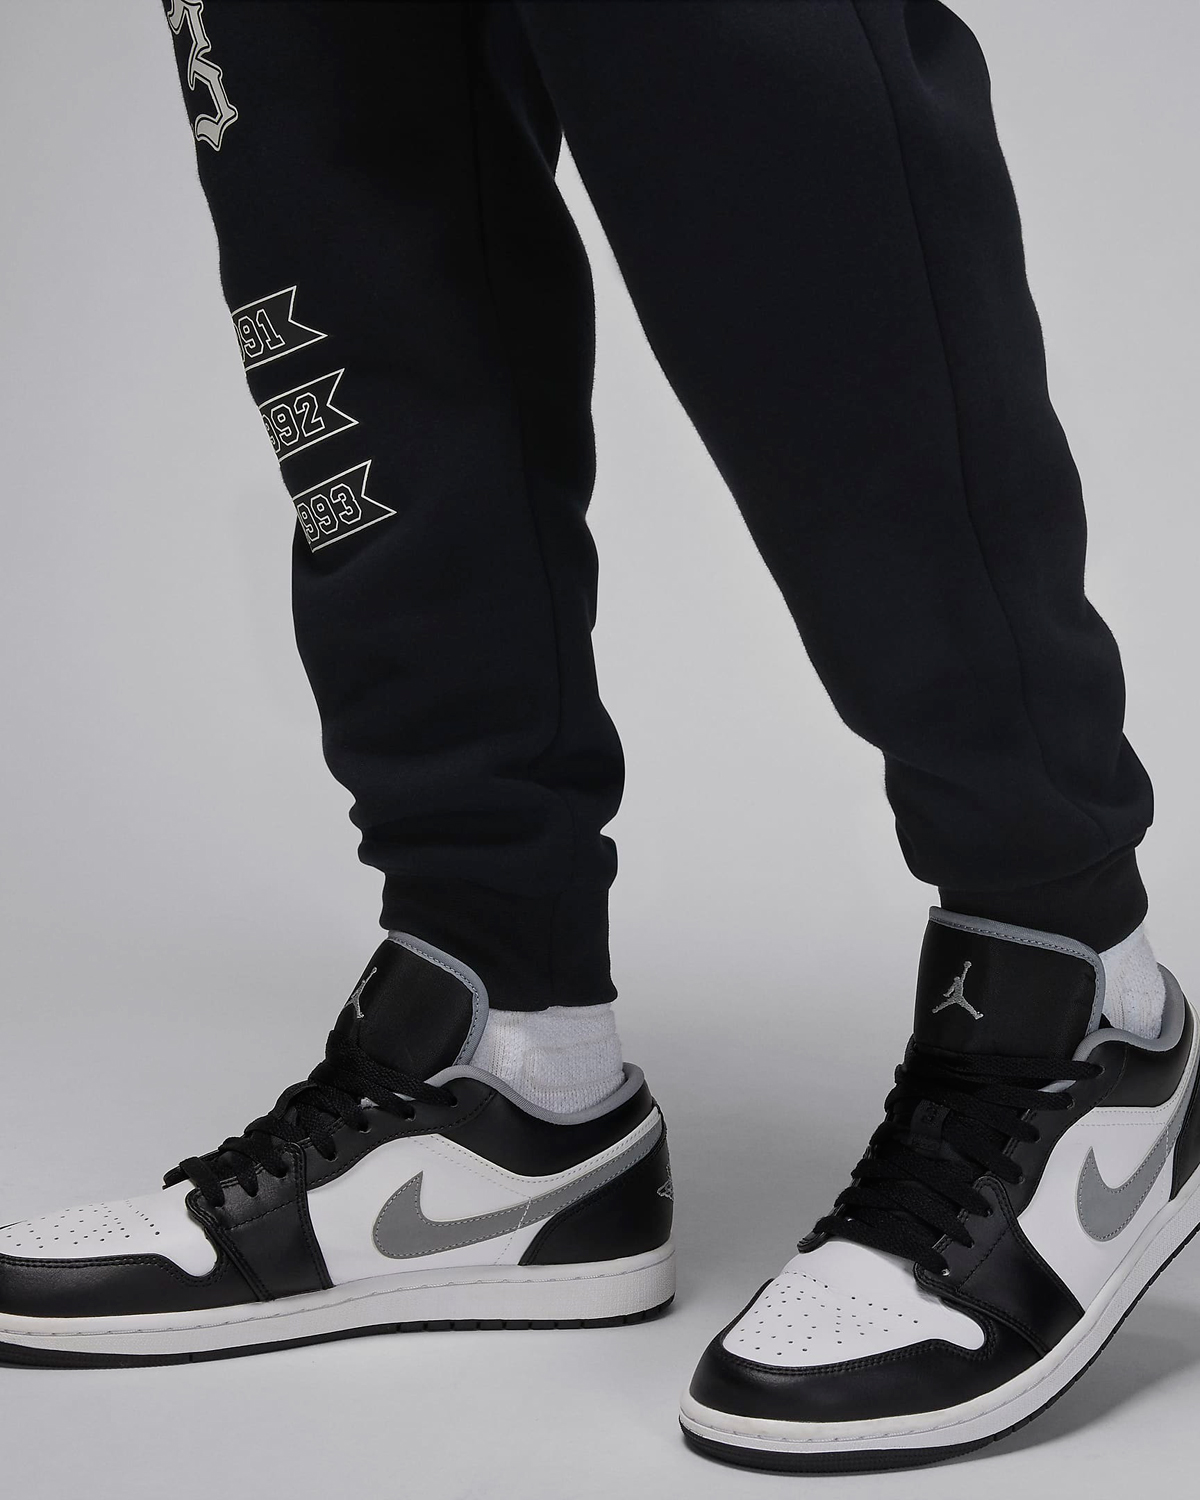 Jordan-Essentials-Pants-Black-White-3